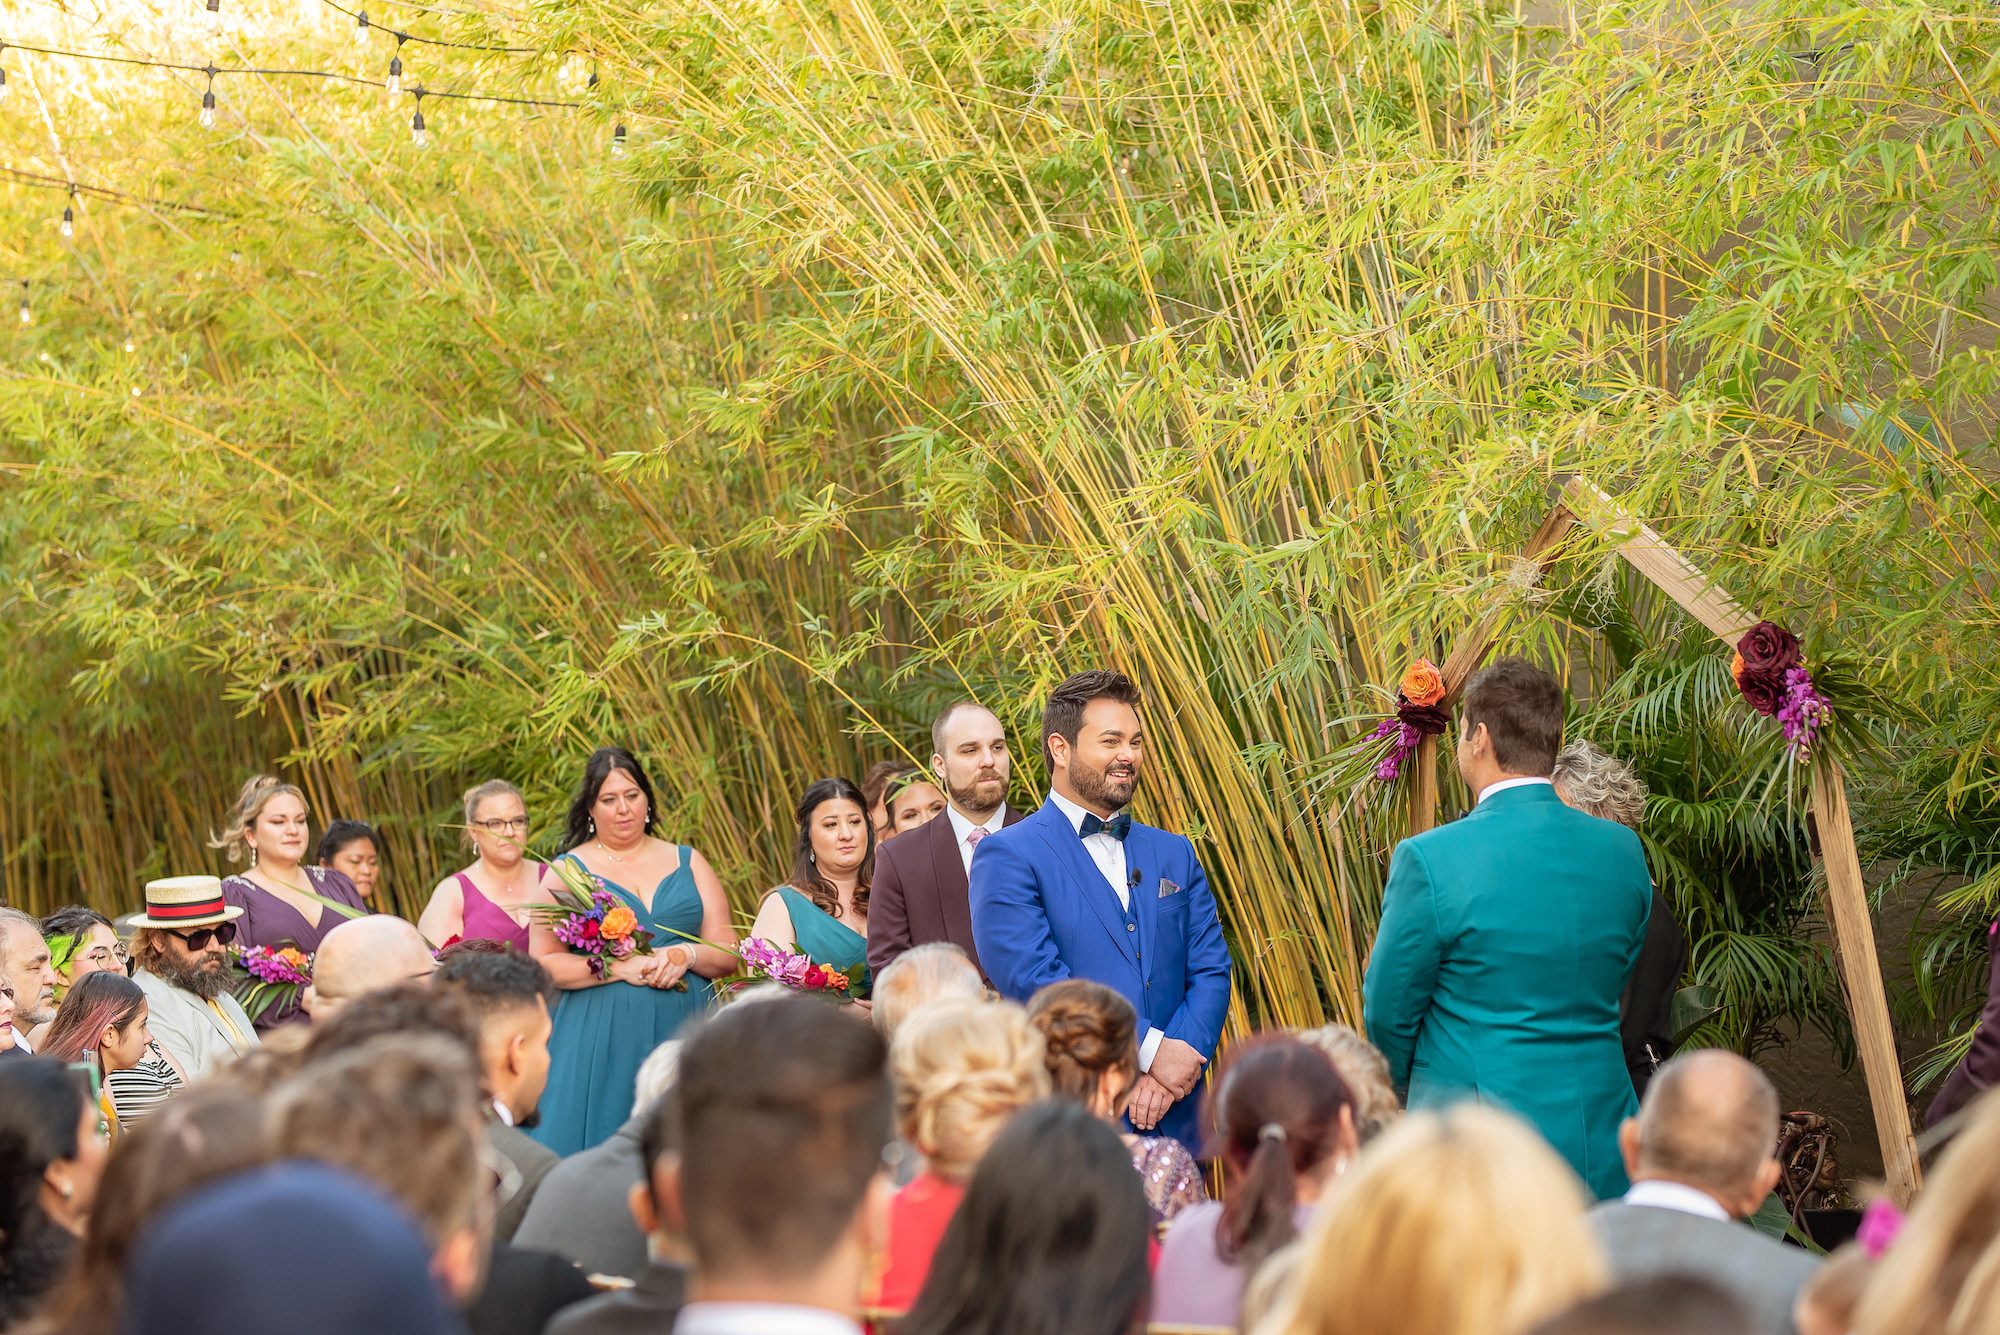 Groom and Groom Exchanging Vows in Tropical Industrial Wedding Ceremony | St. Petersburg Wedding Venue Nova 535 | Florida Photographer Kristen Marie Photography